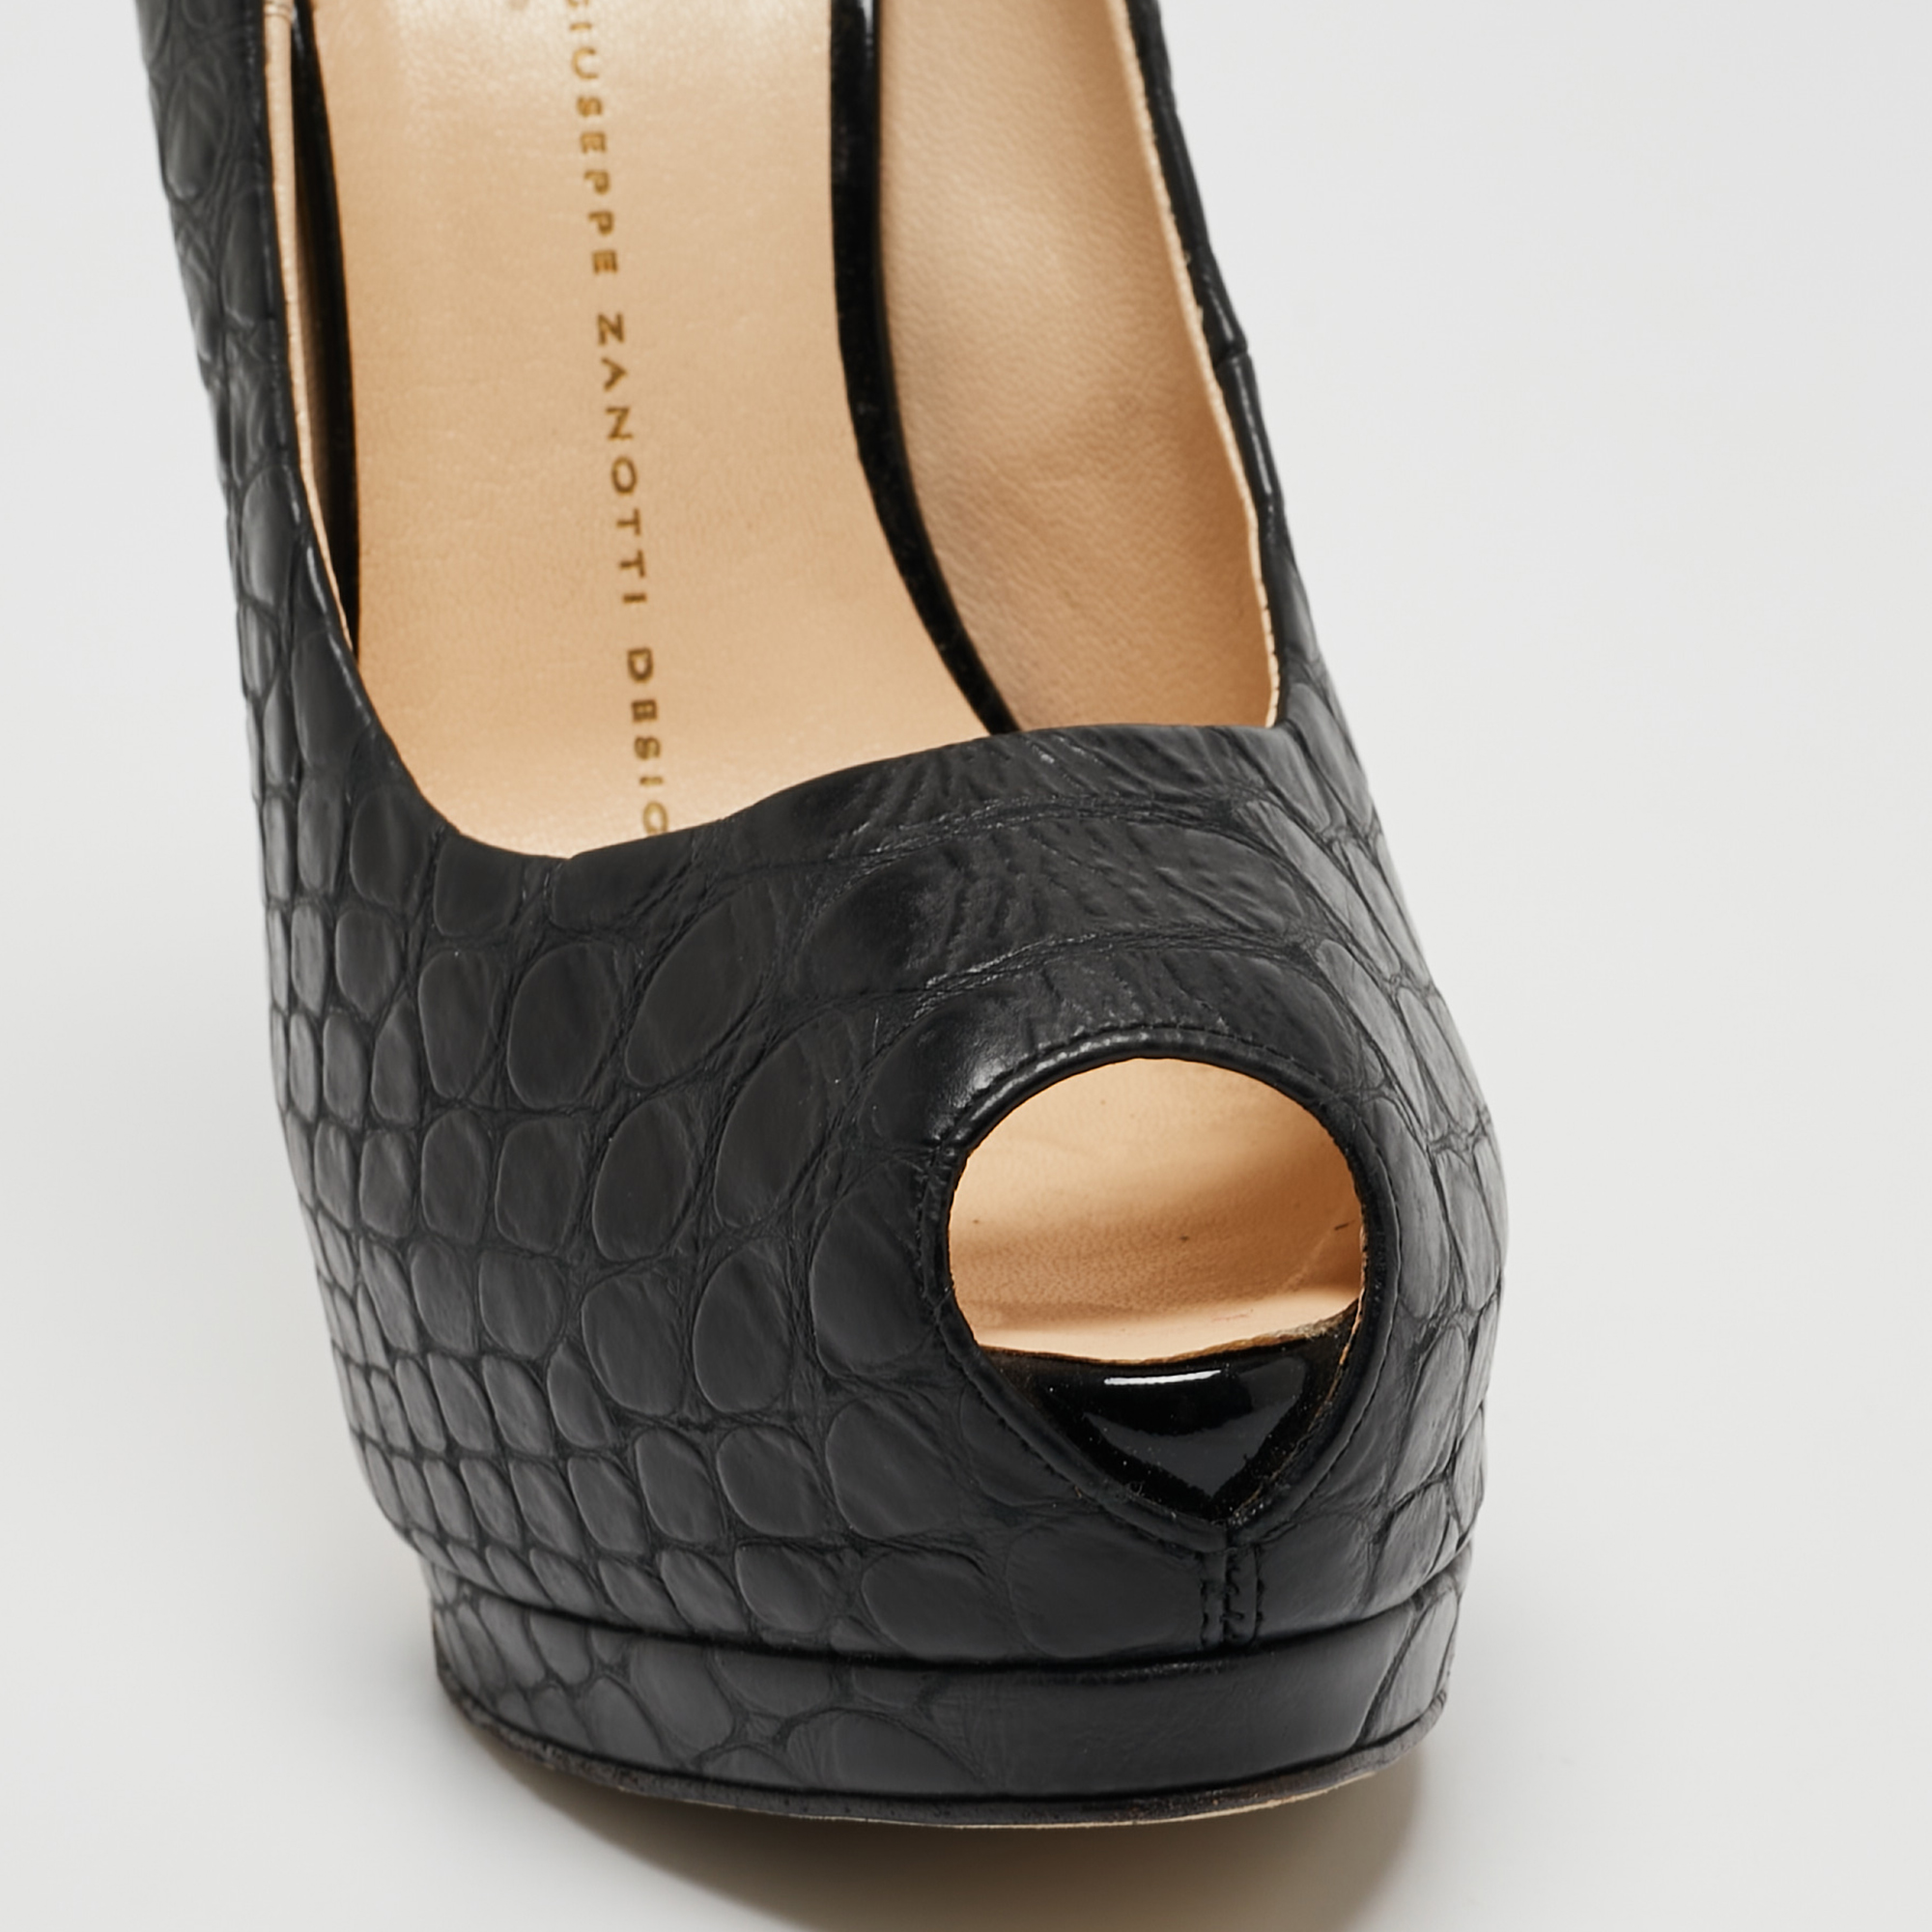 Giuseppe Zanotti Black Croc Embossed Leather Peep Toe Platform Pumps Size 37.5